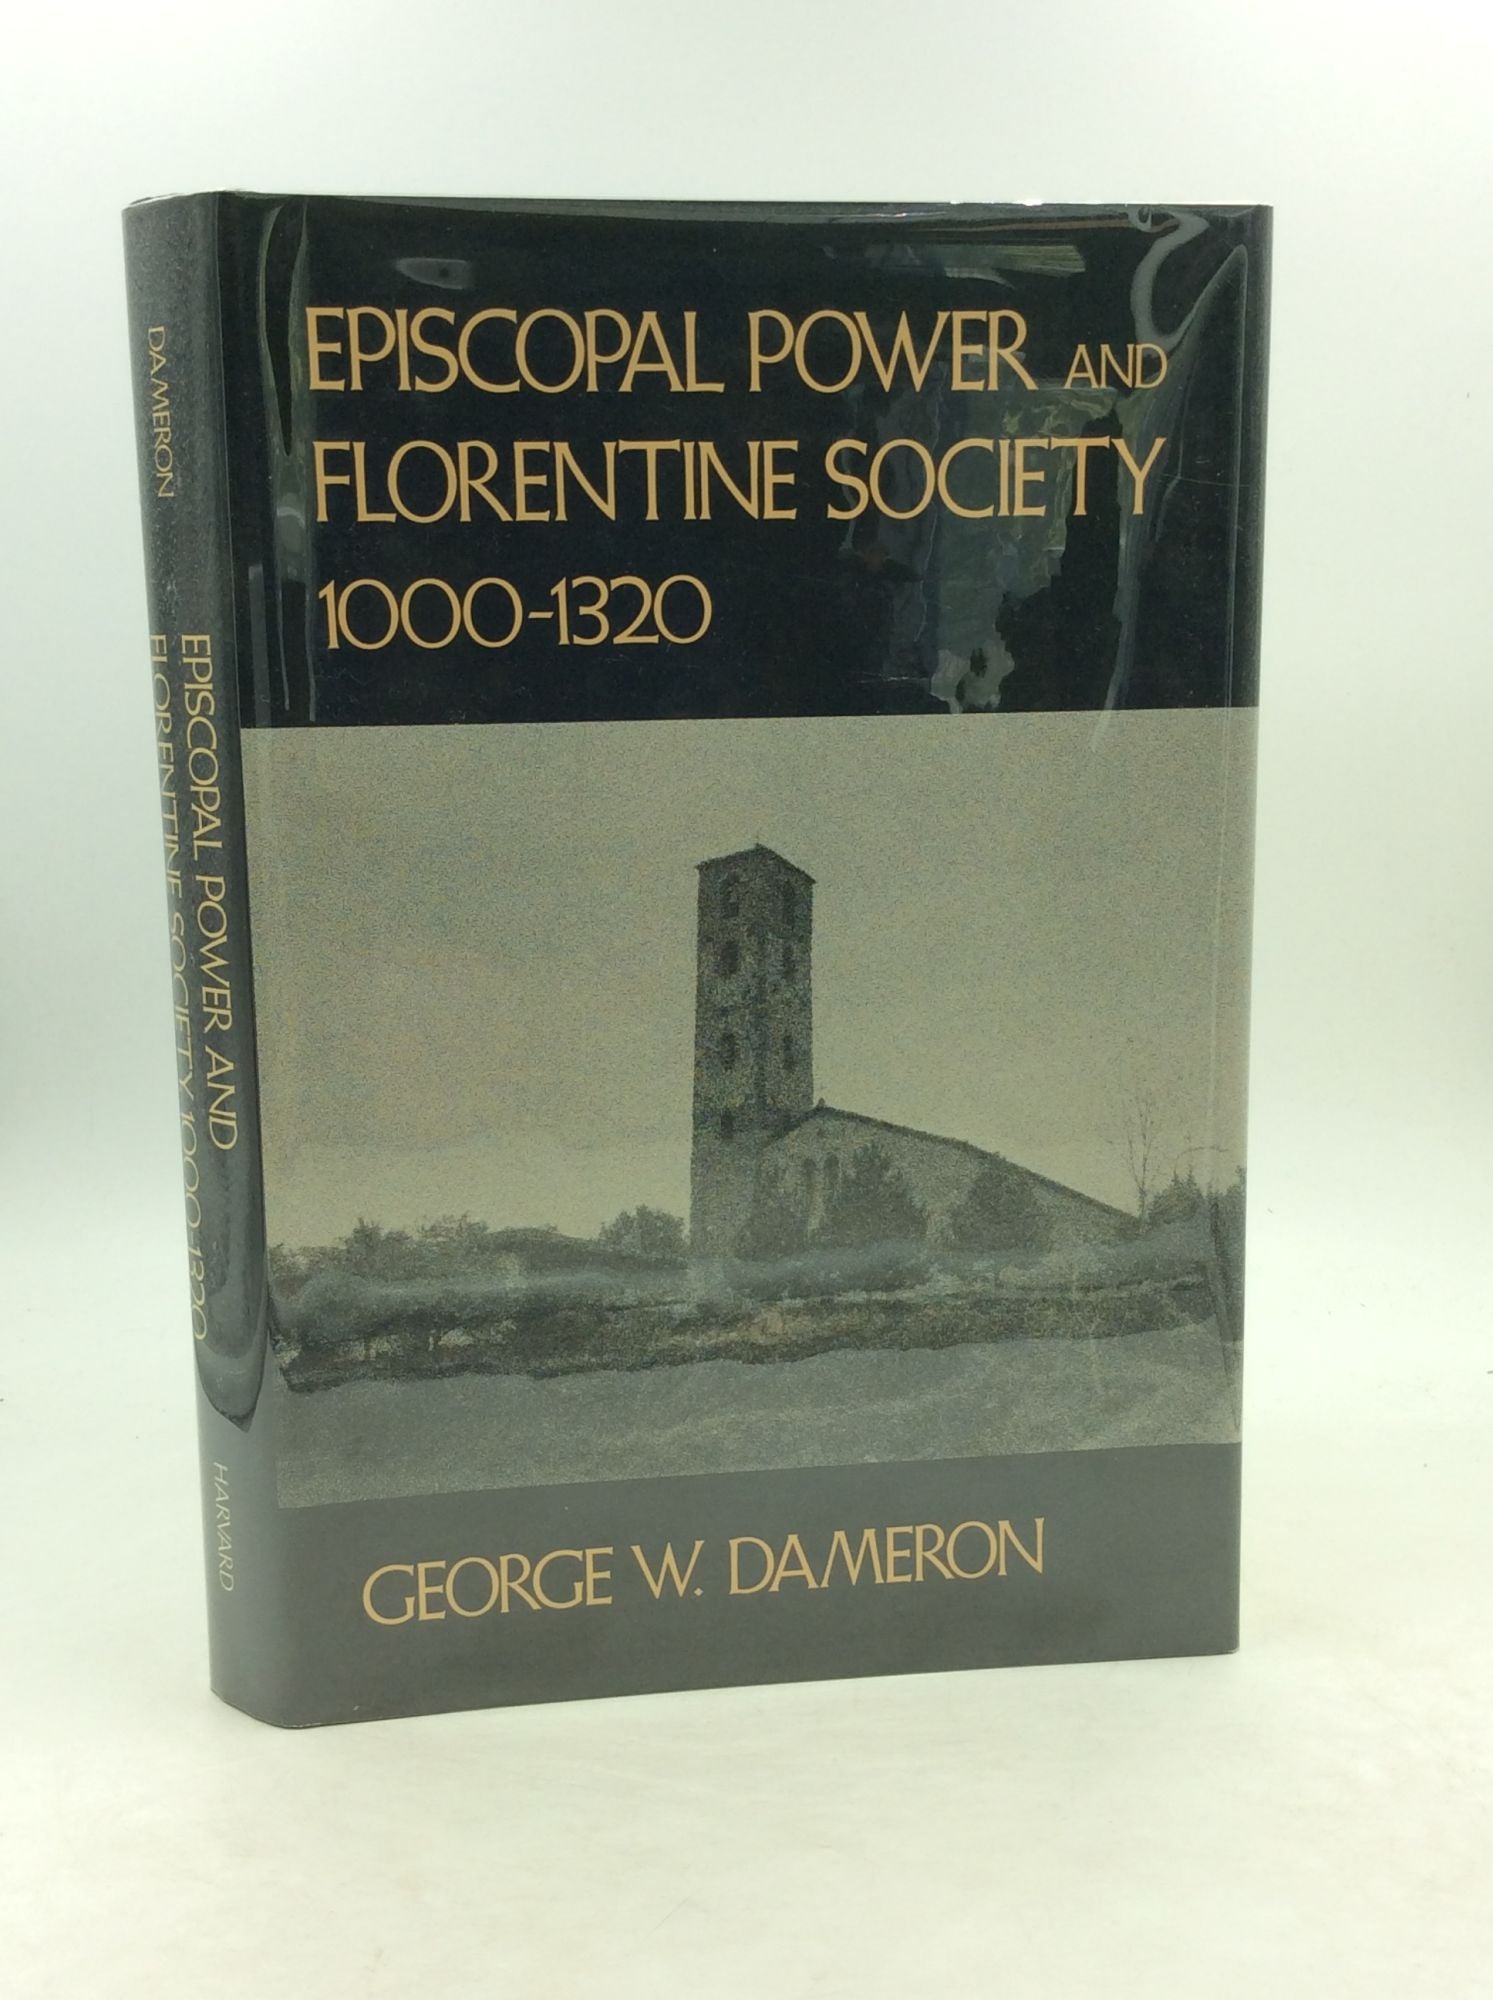 George W. Dameron - Episcopal Power and Florentine Society 1000-1320